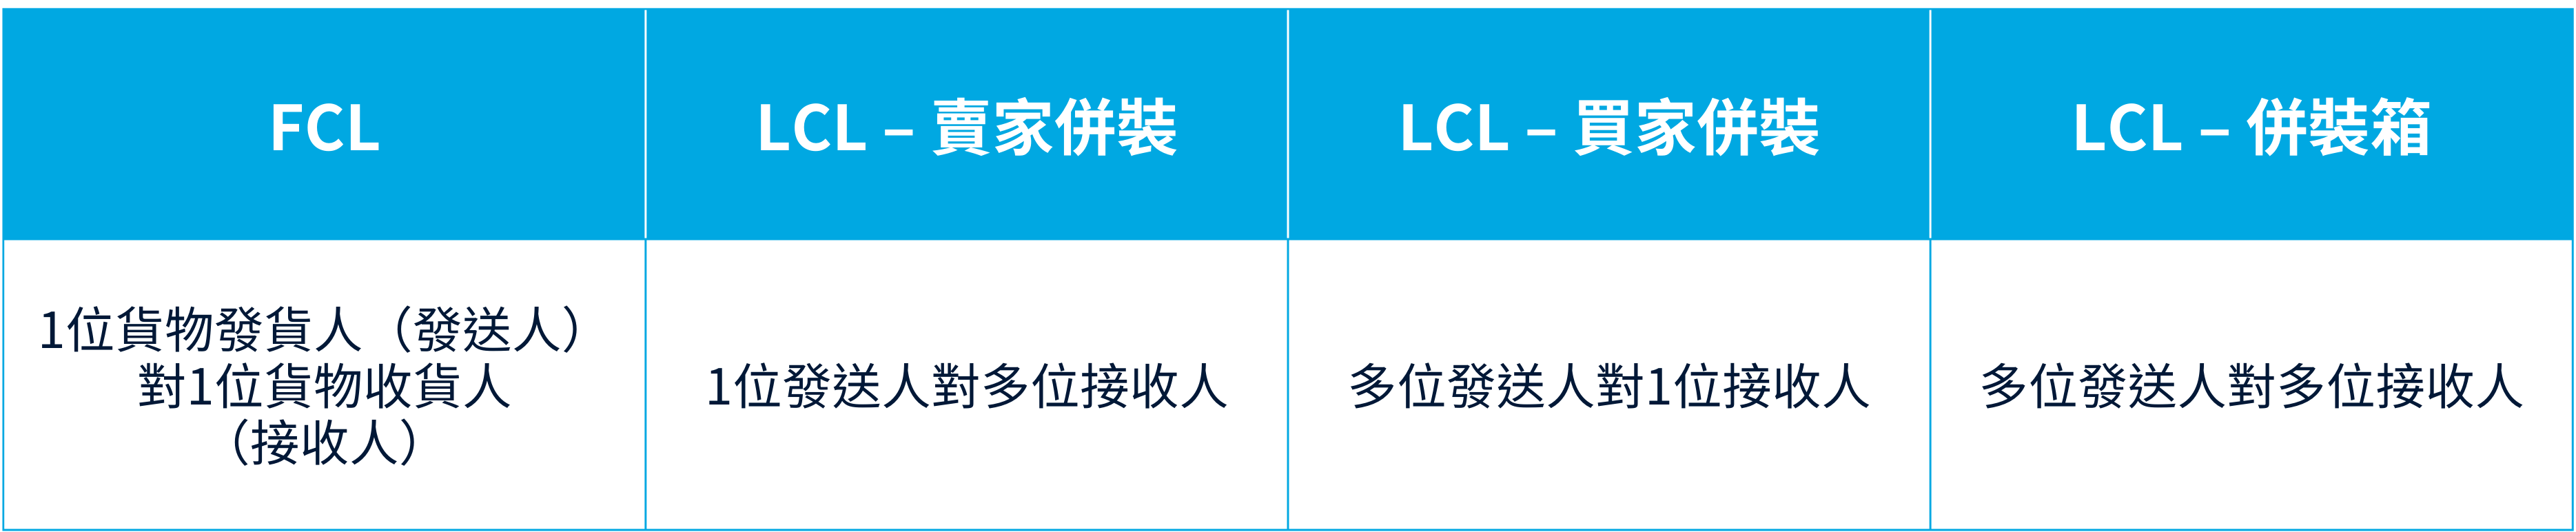 LCL運輸類型